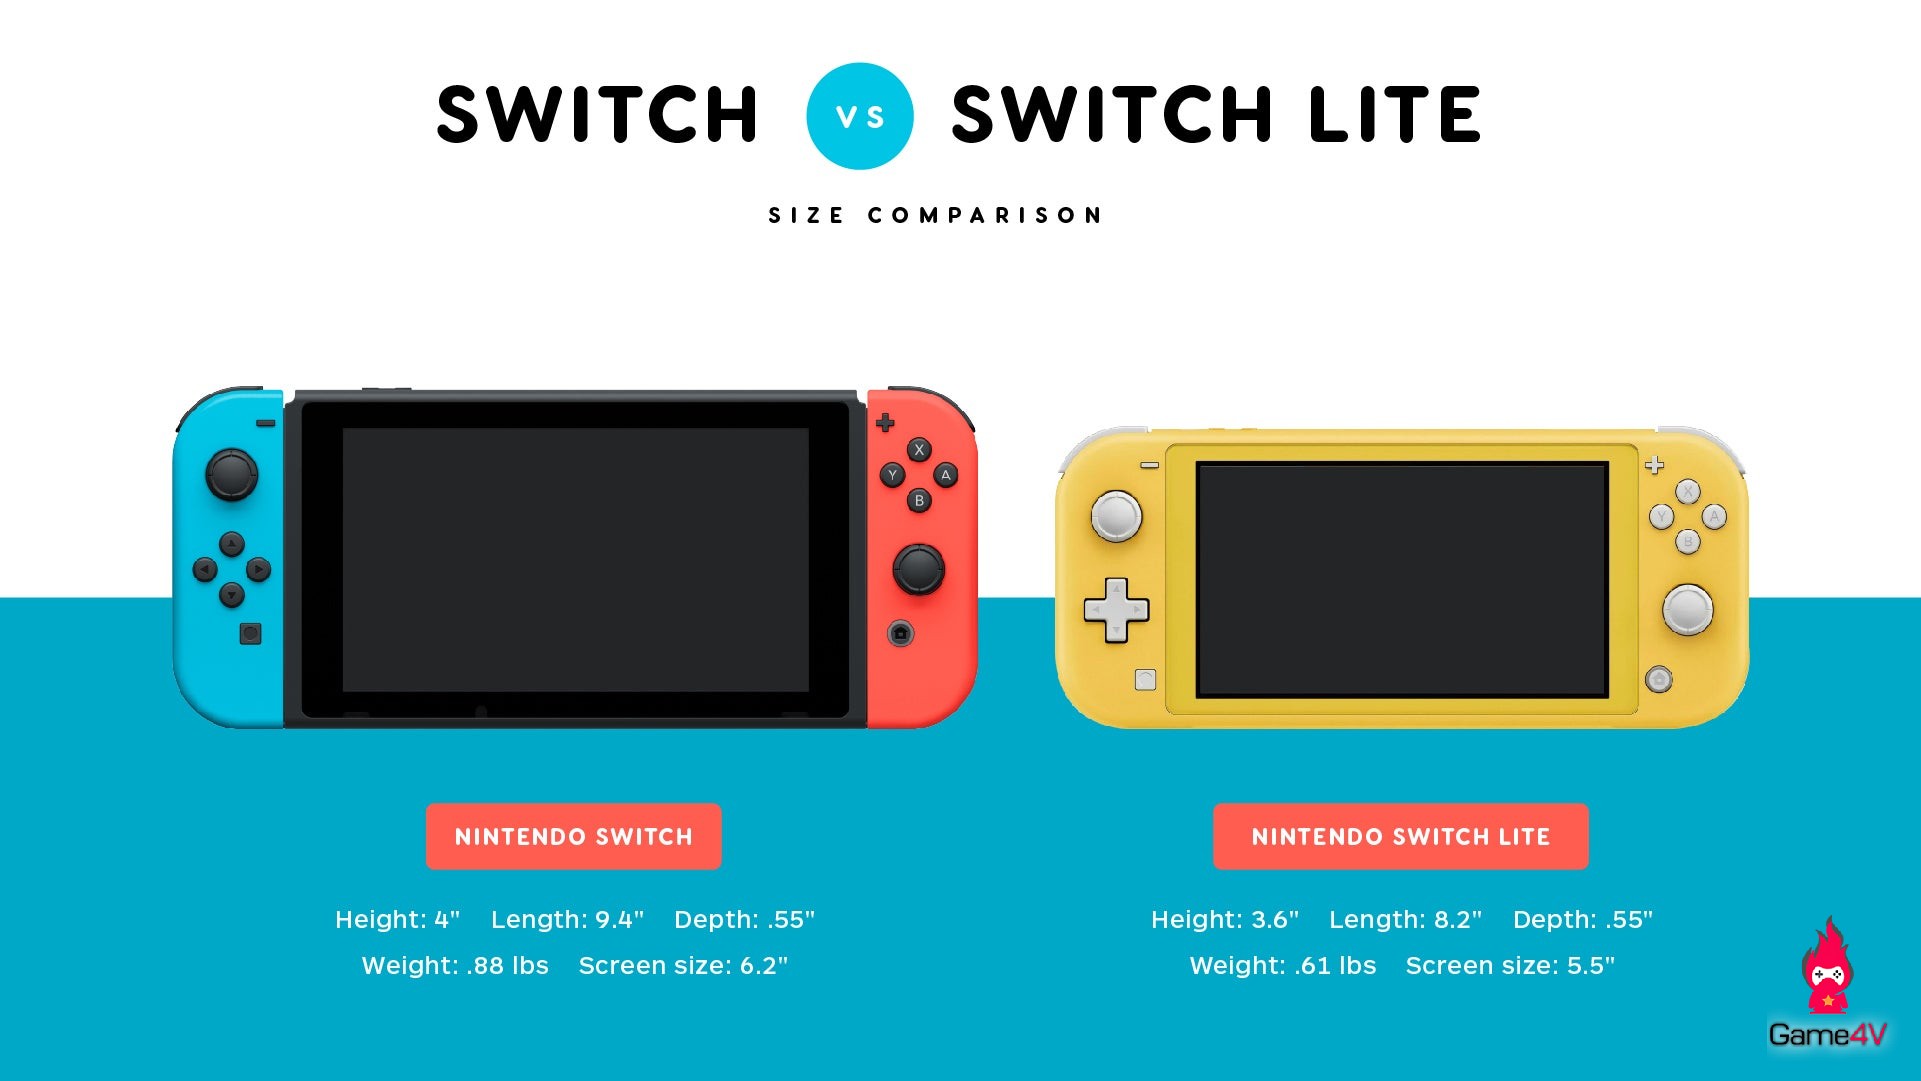 Nintendo switch cheats. Nintendo Switch Lite Размеры. Nintendo Switch габариты. Nintendo Switch vs Nintendo Switch Lite Size. Нинтендо свитч размер дисплея.